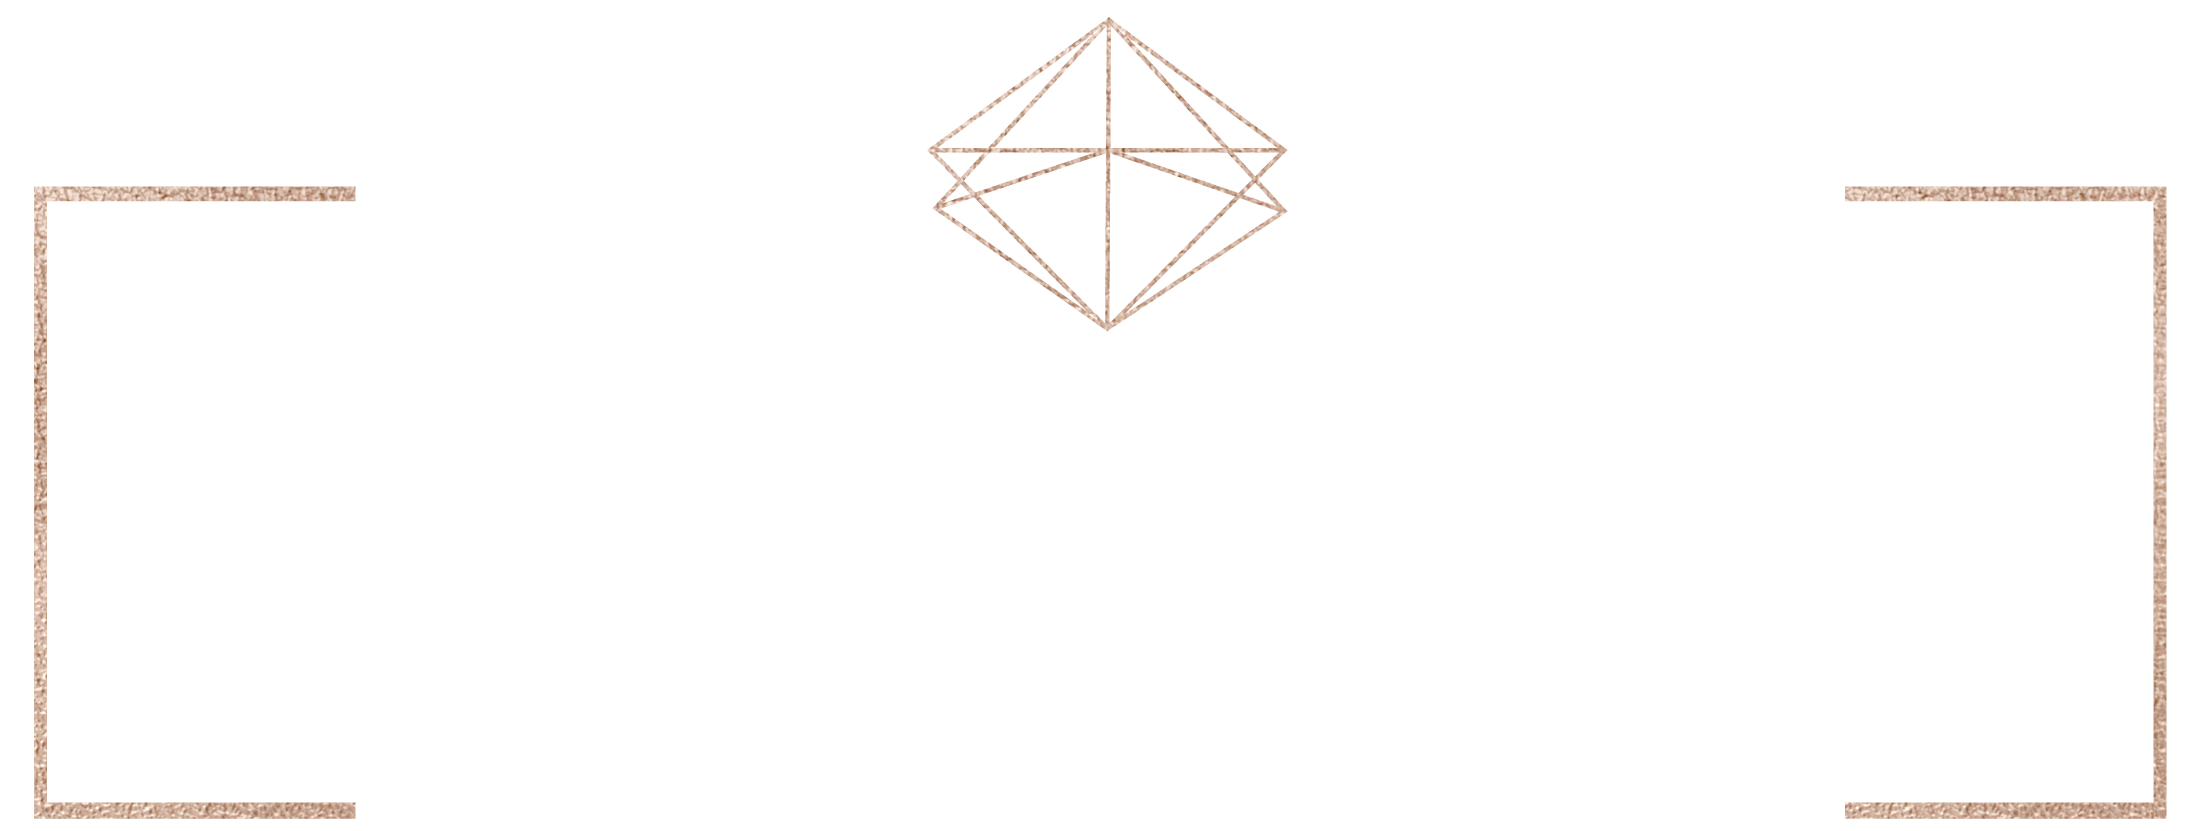 Chrystal Clifton logo